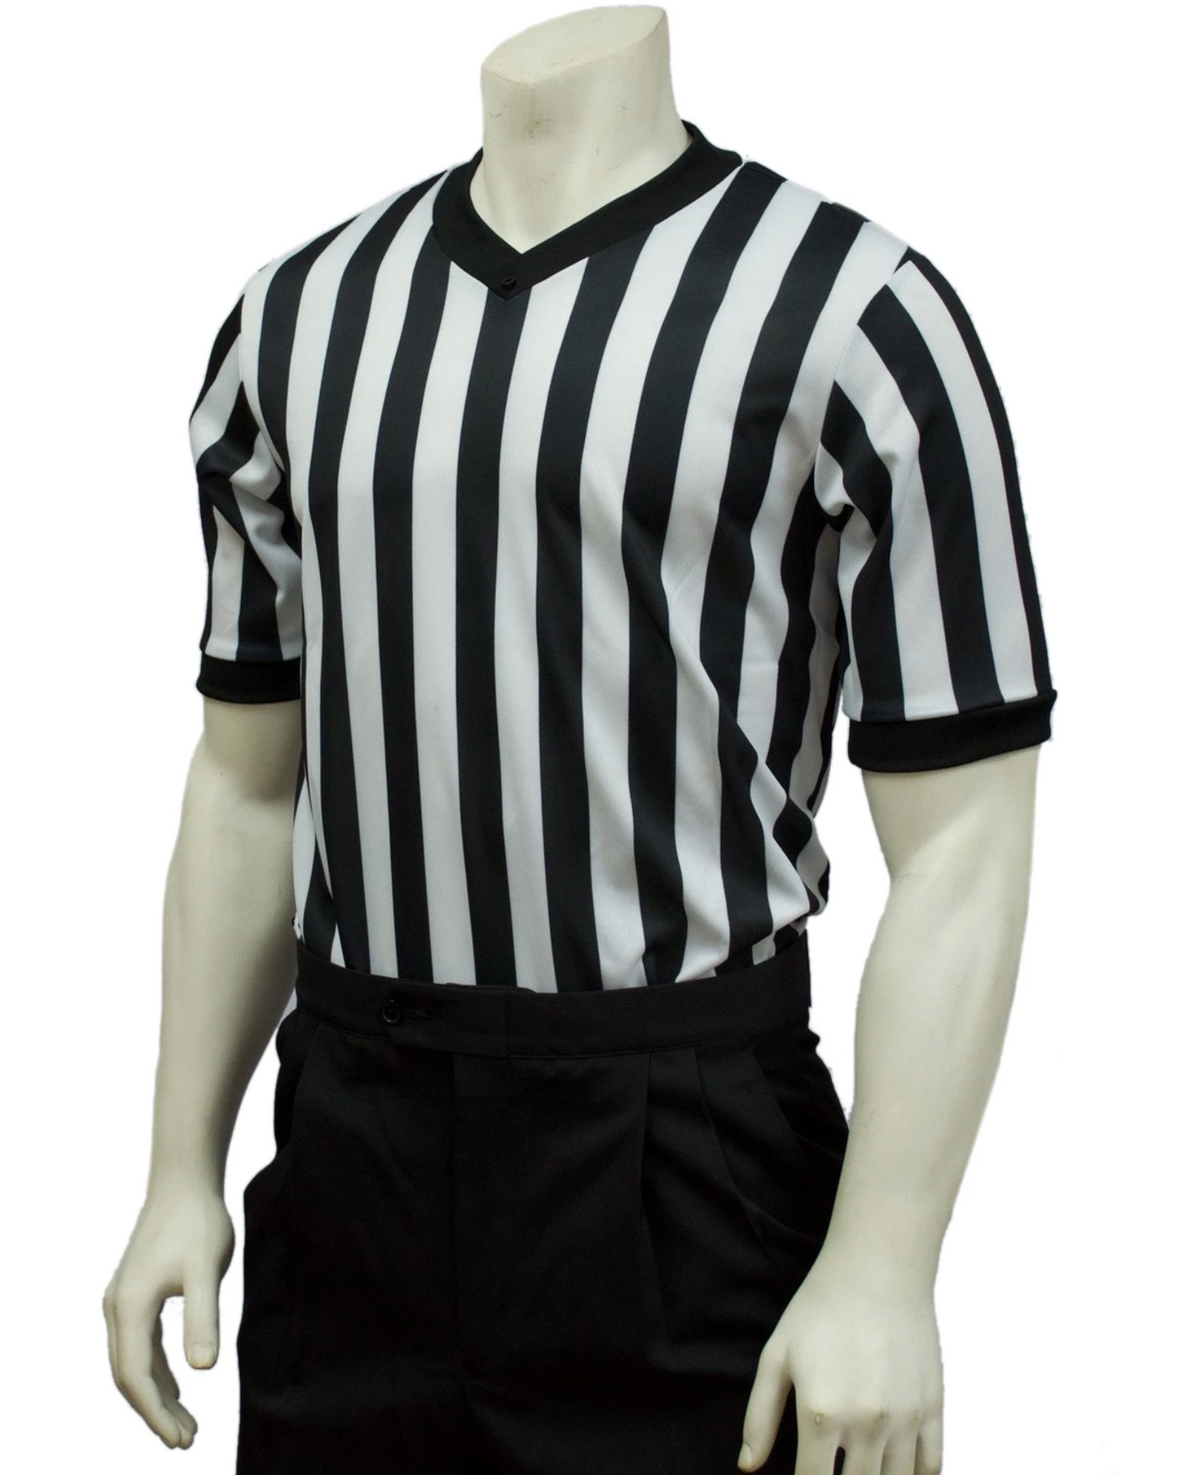 Smitty | BKS-200 | 1" Stripe | Performance Mesh Short Sleeve Shirt